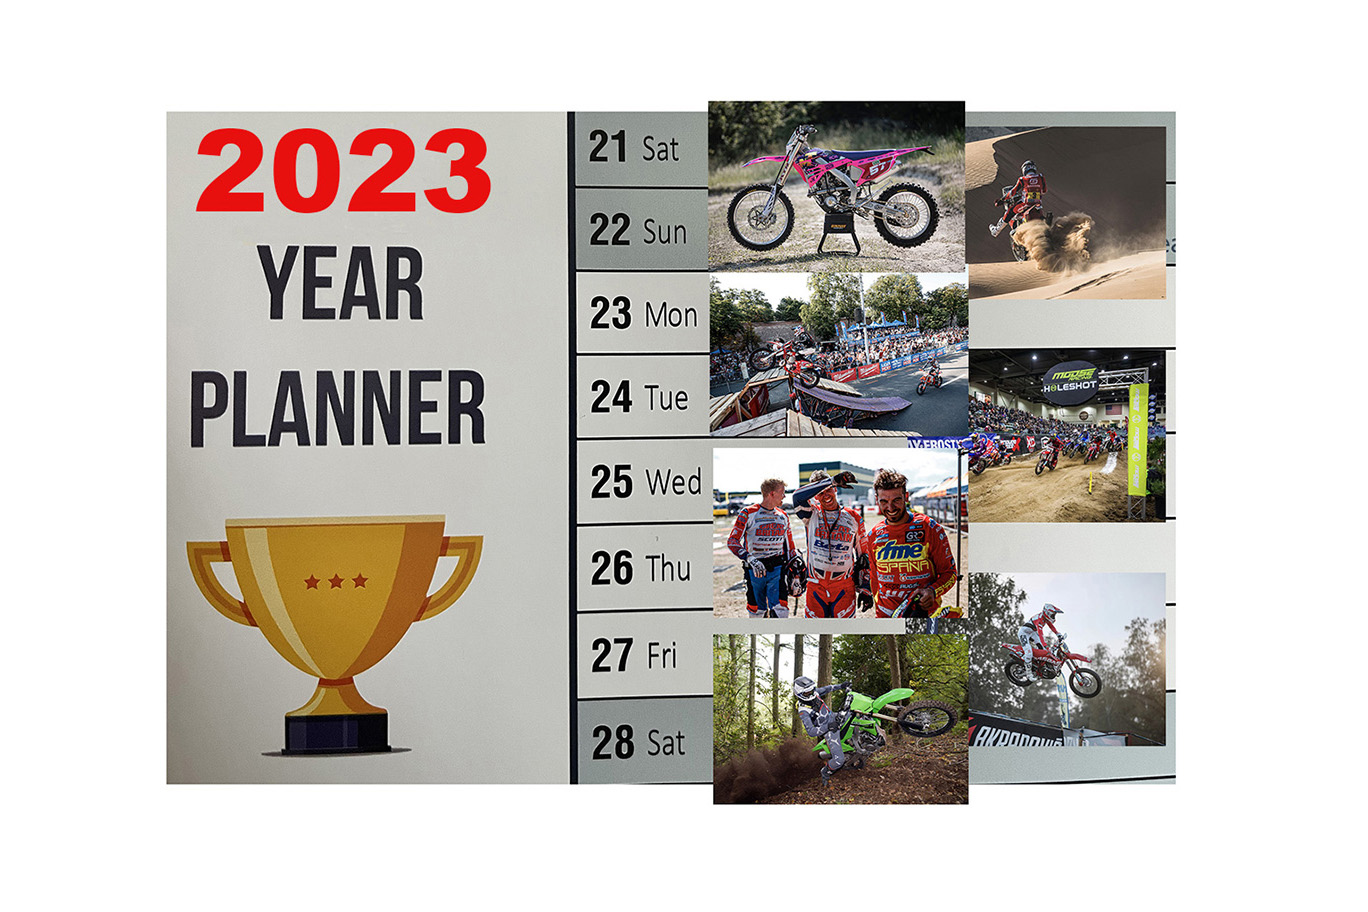 The List: Complete 2023 International Enduro Events Calendar